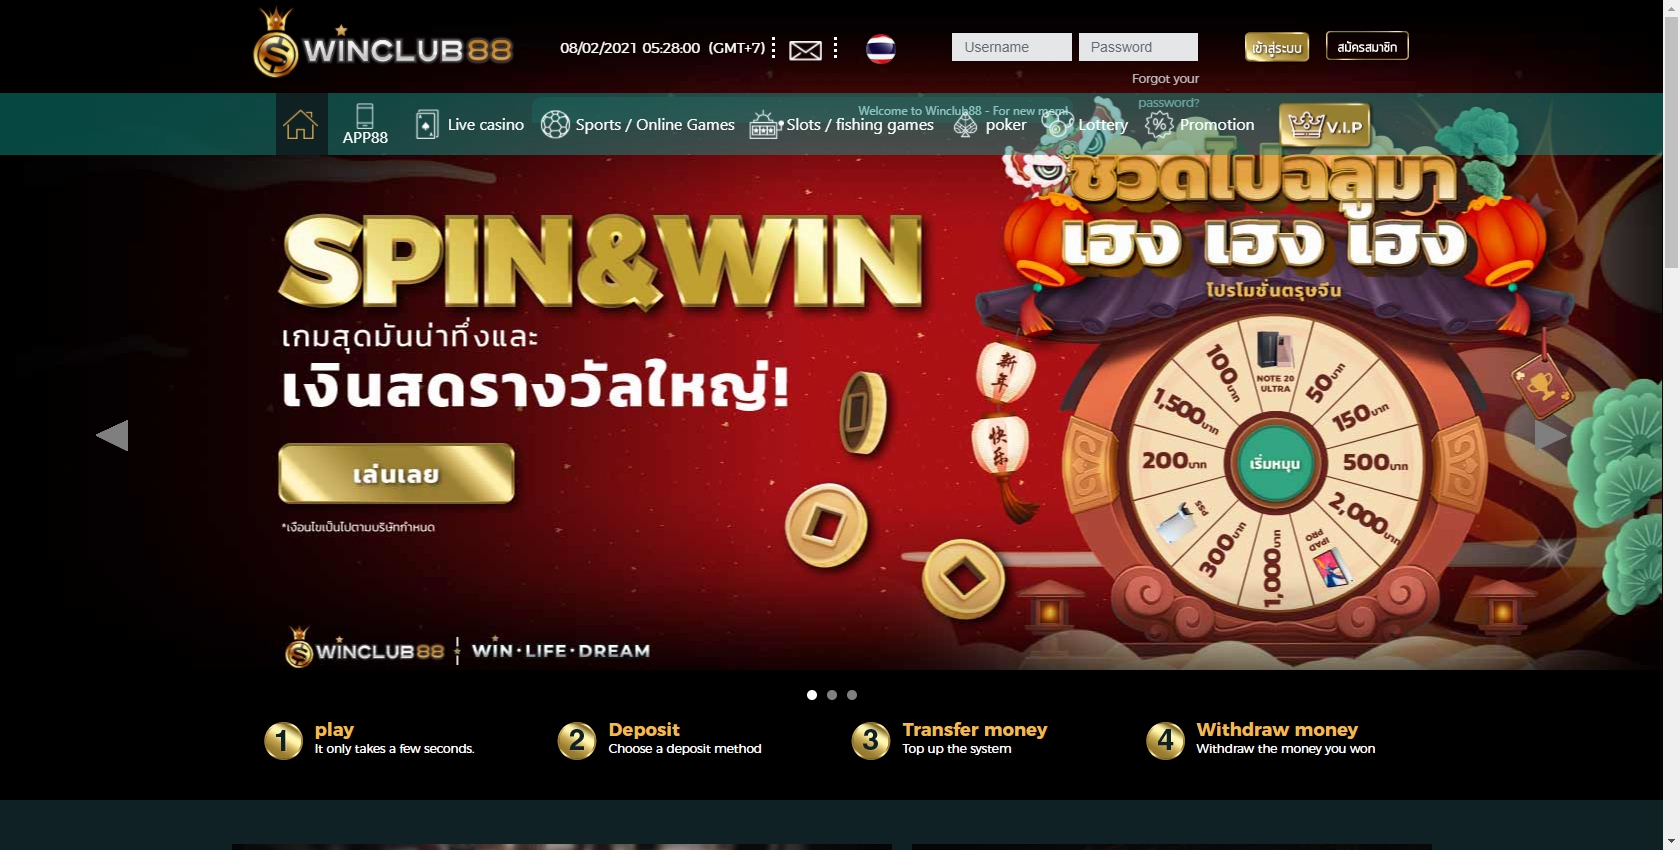 Win Club 88 Casino Review